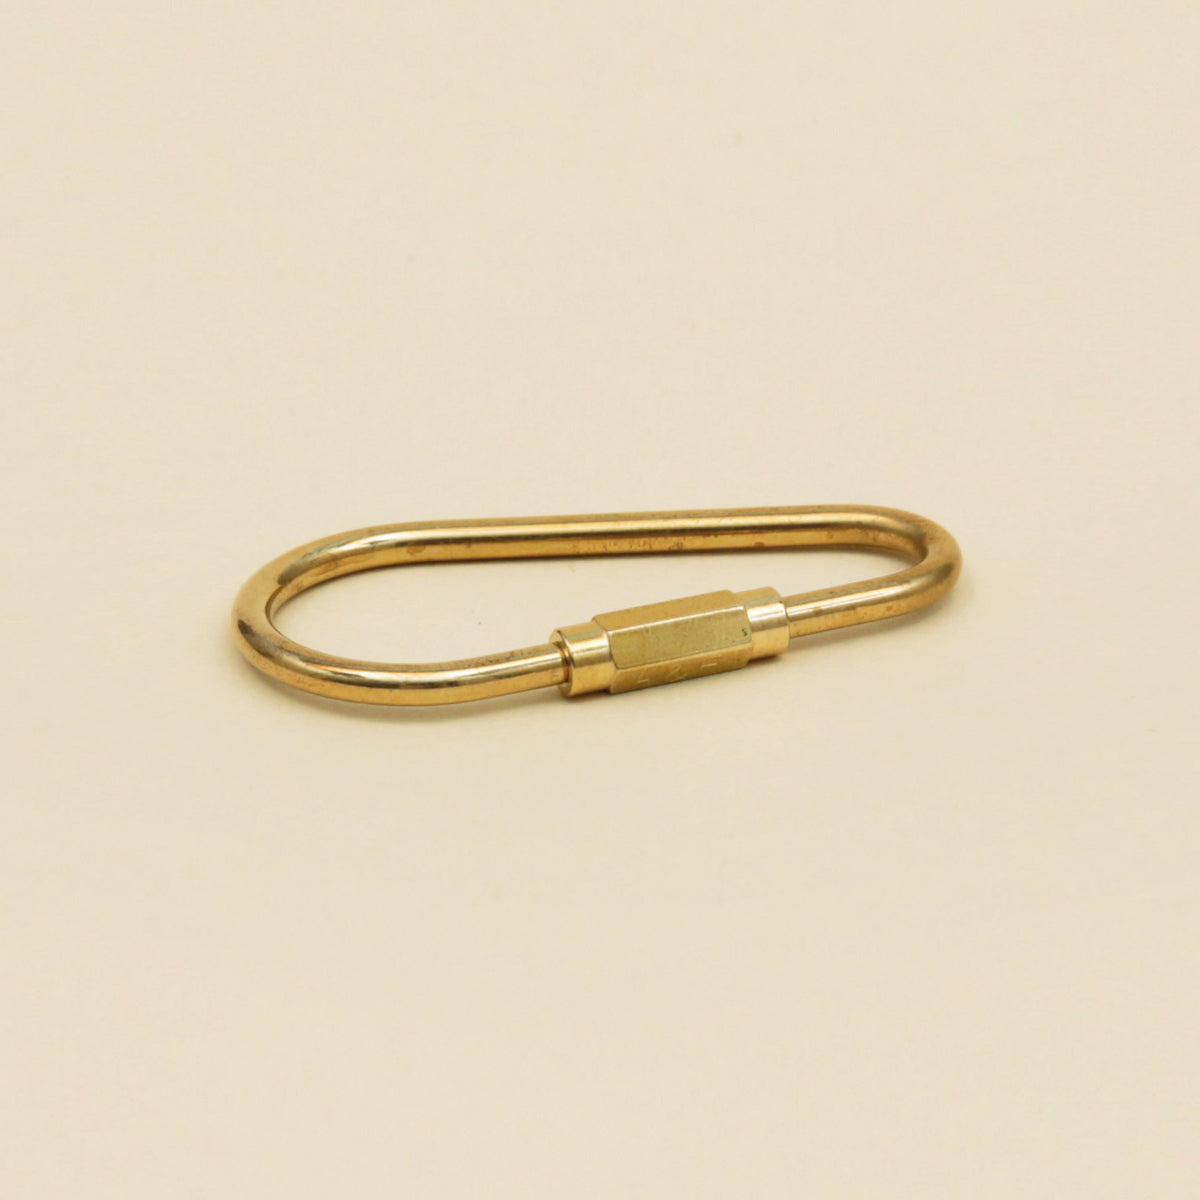 Brass Key Ring - Set of 2 - Small